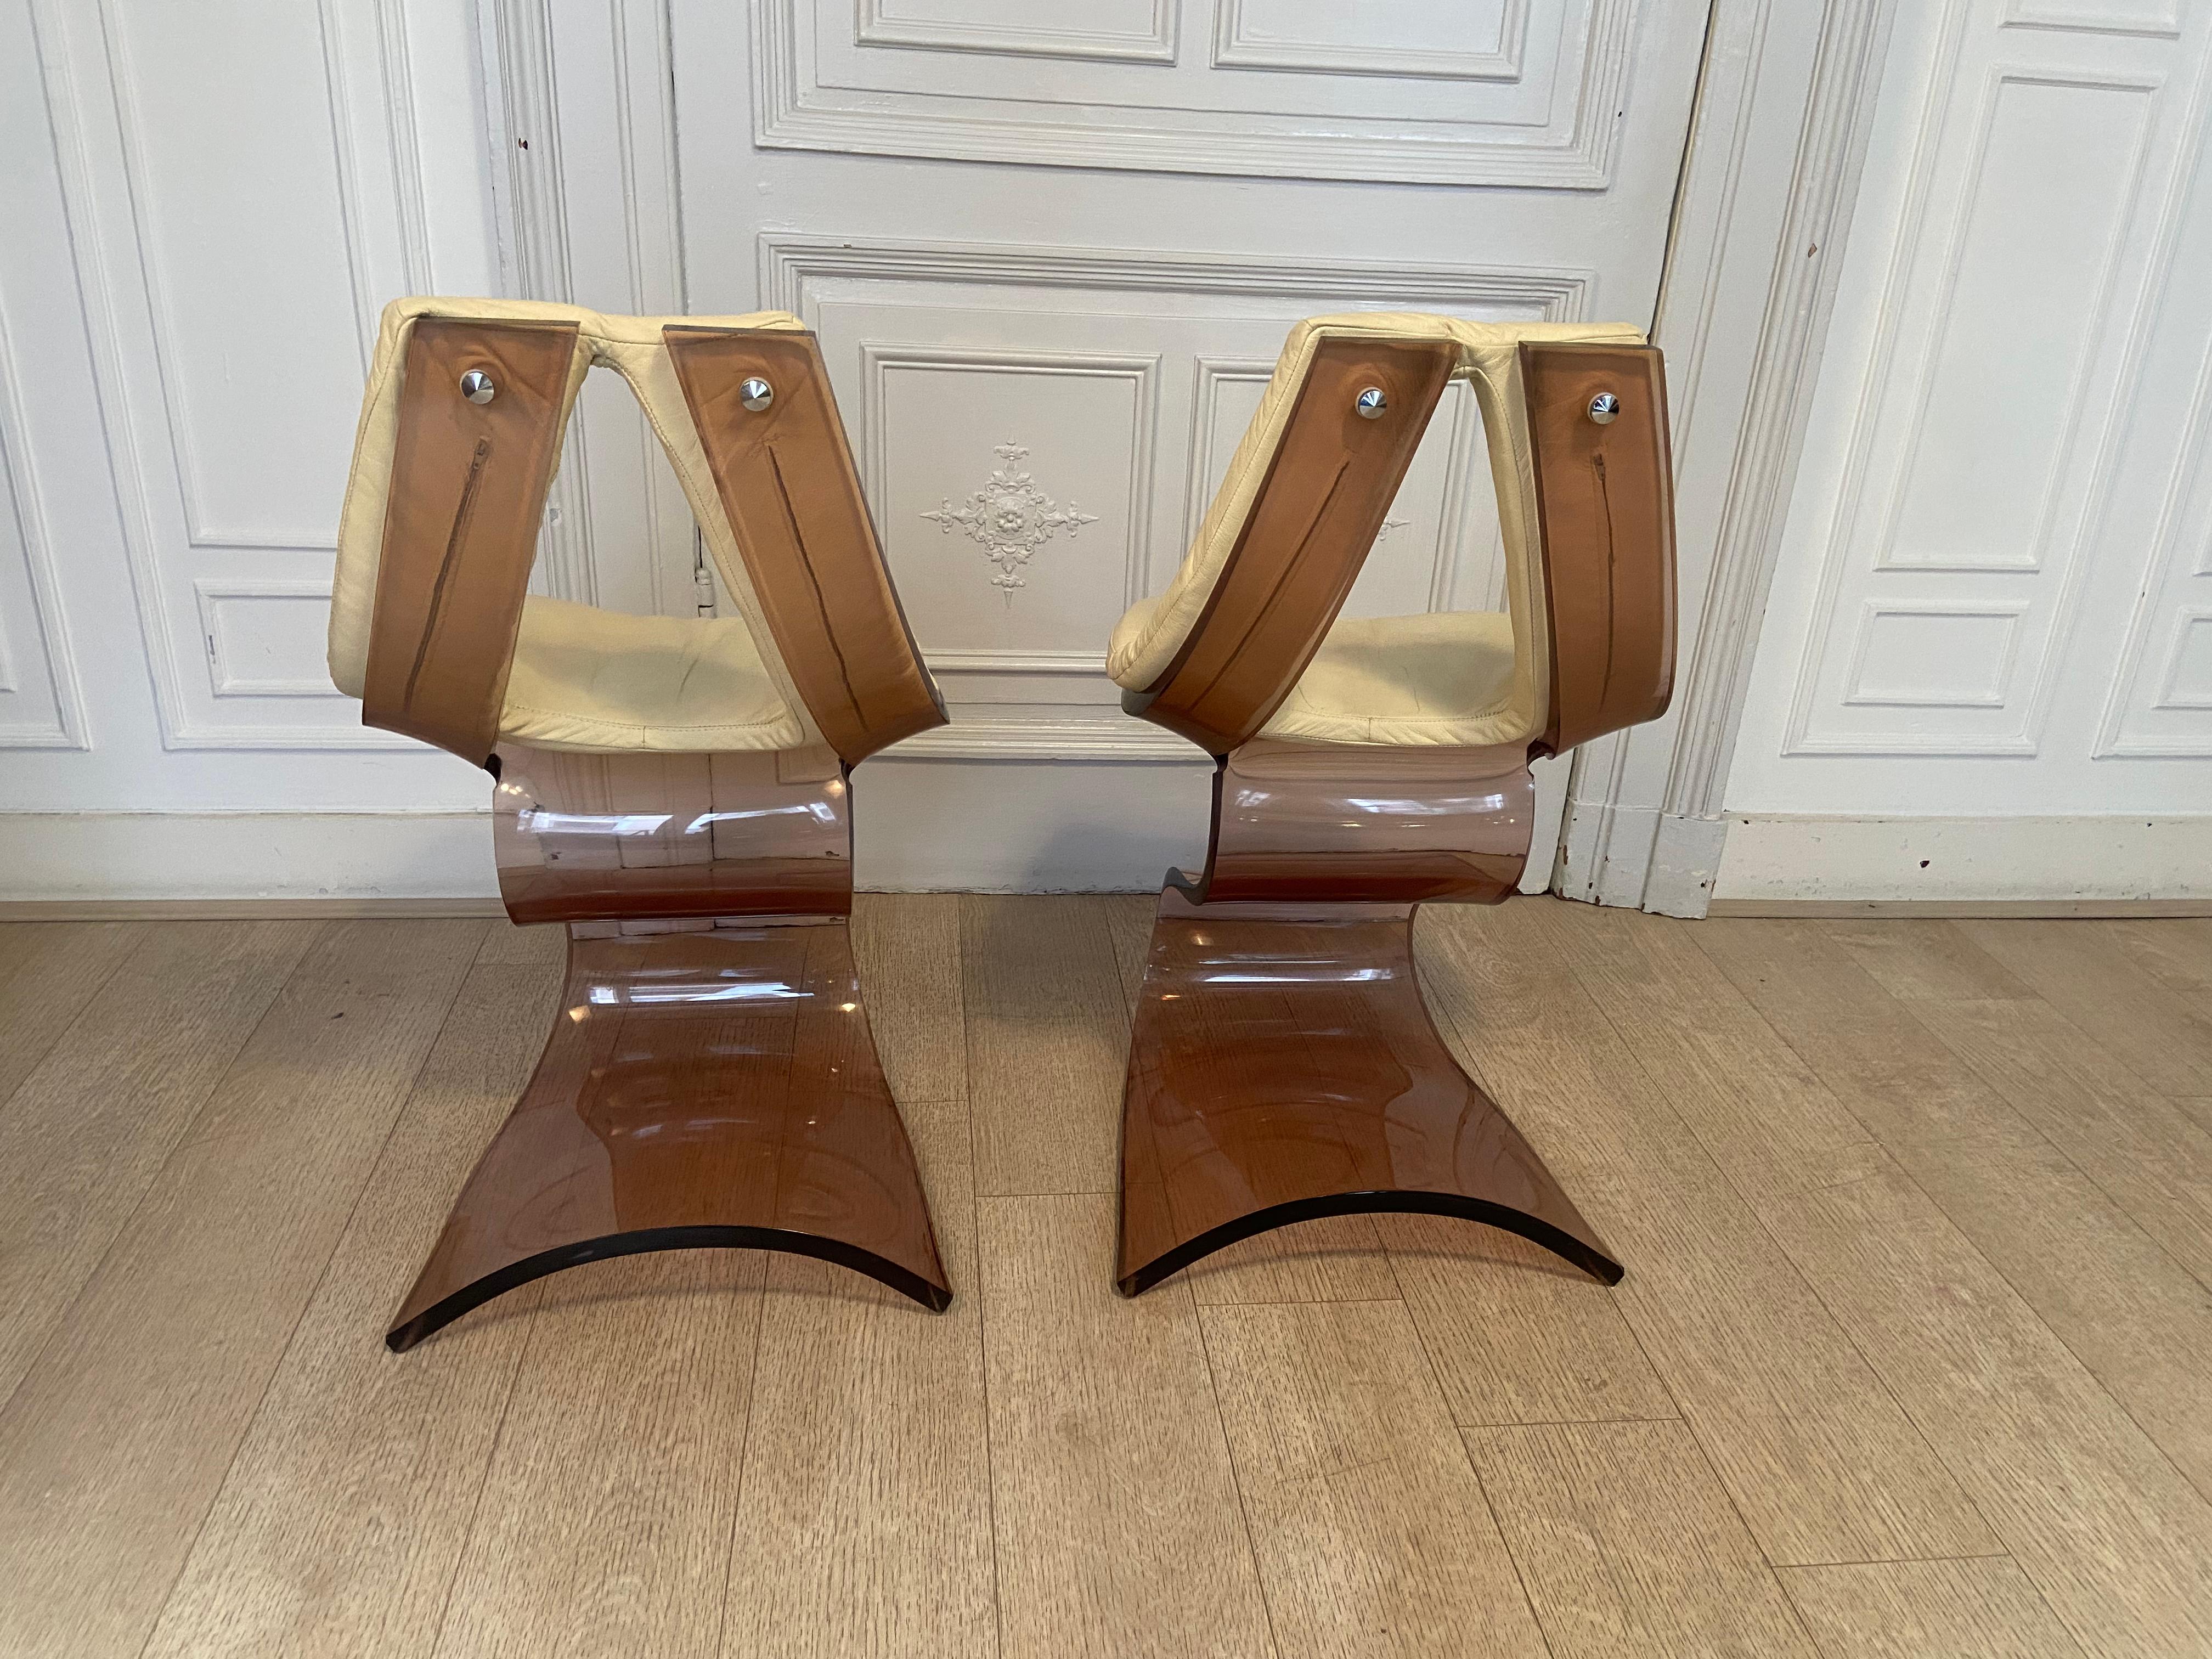 Michel Dumas chairs, plexiglass, 1970s.